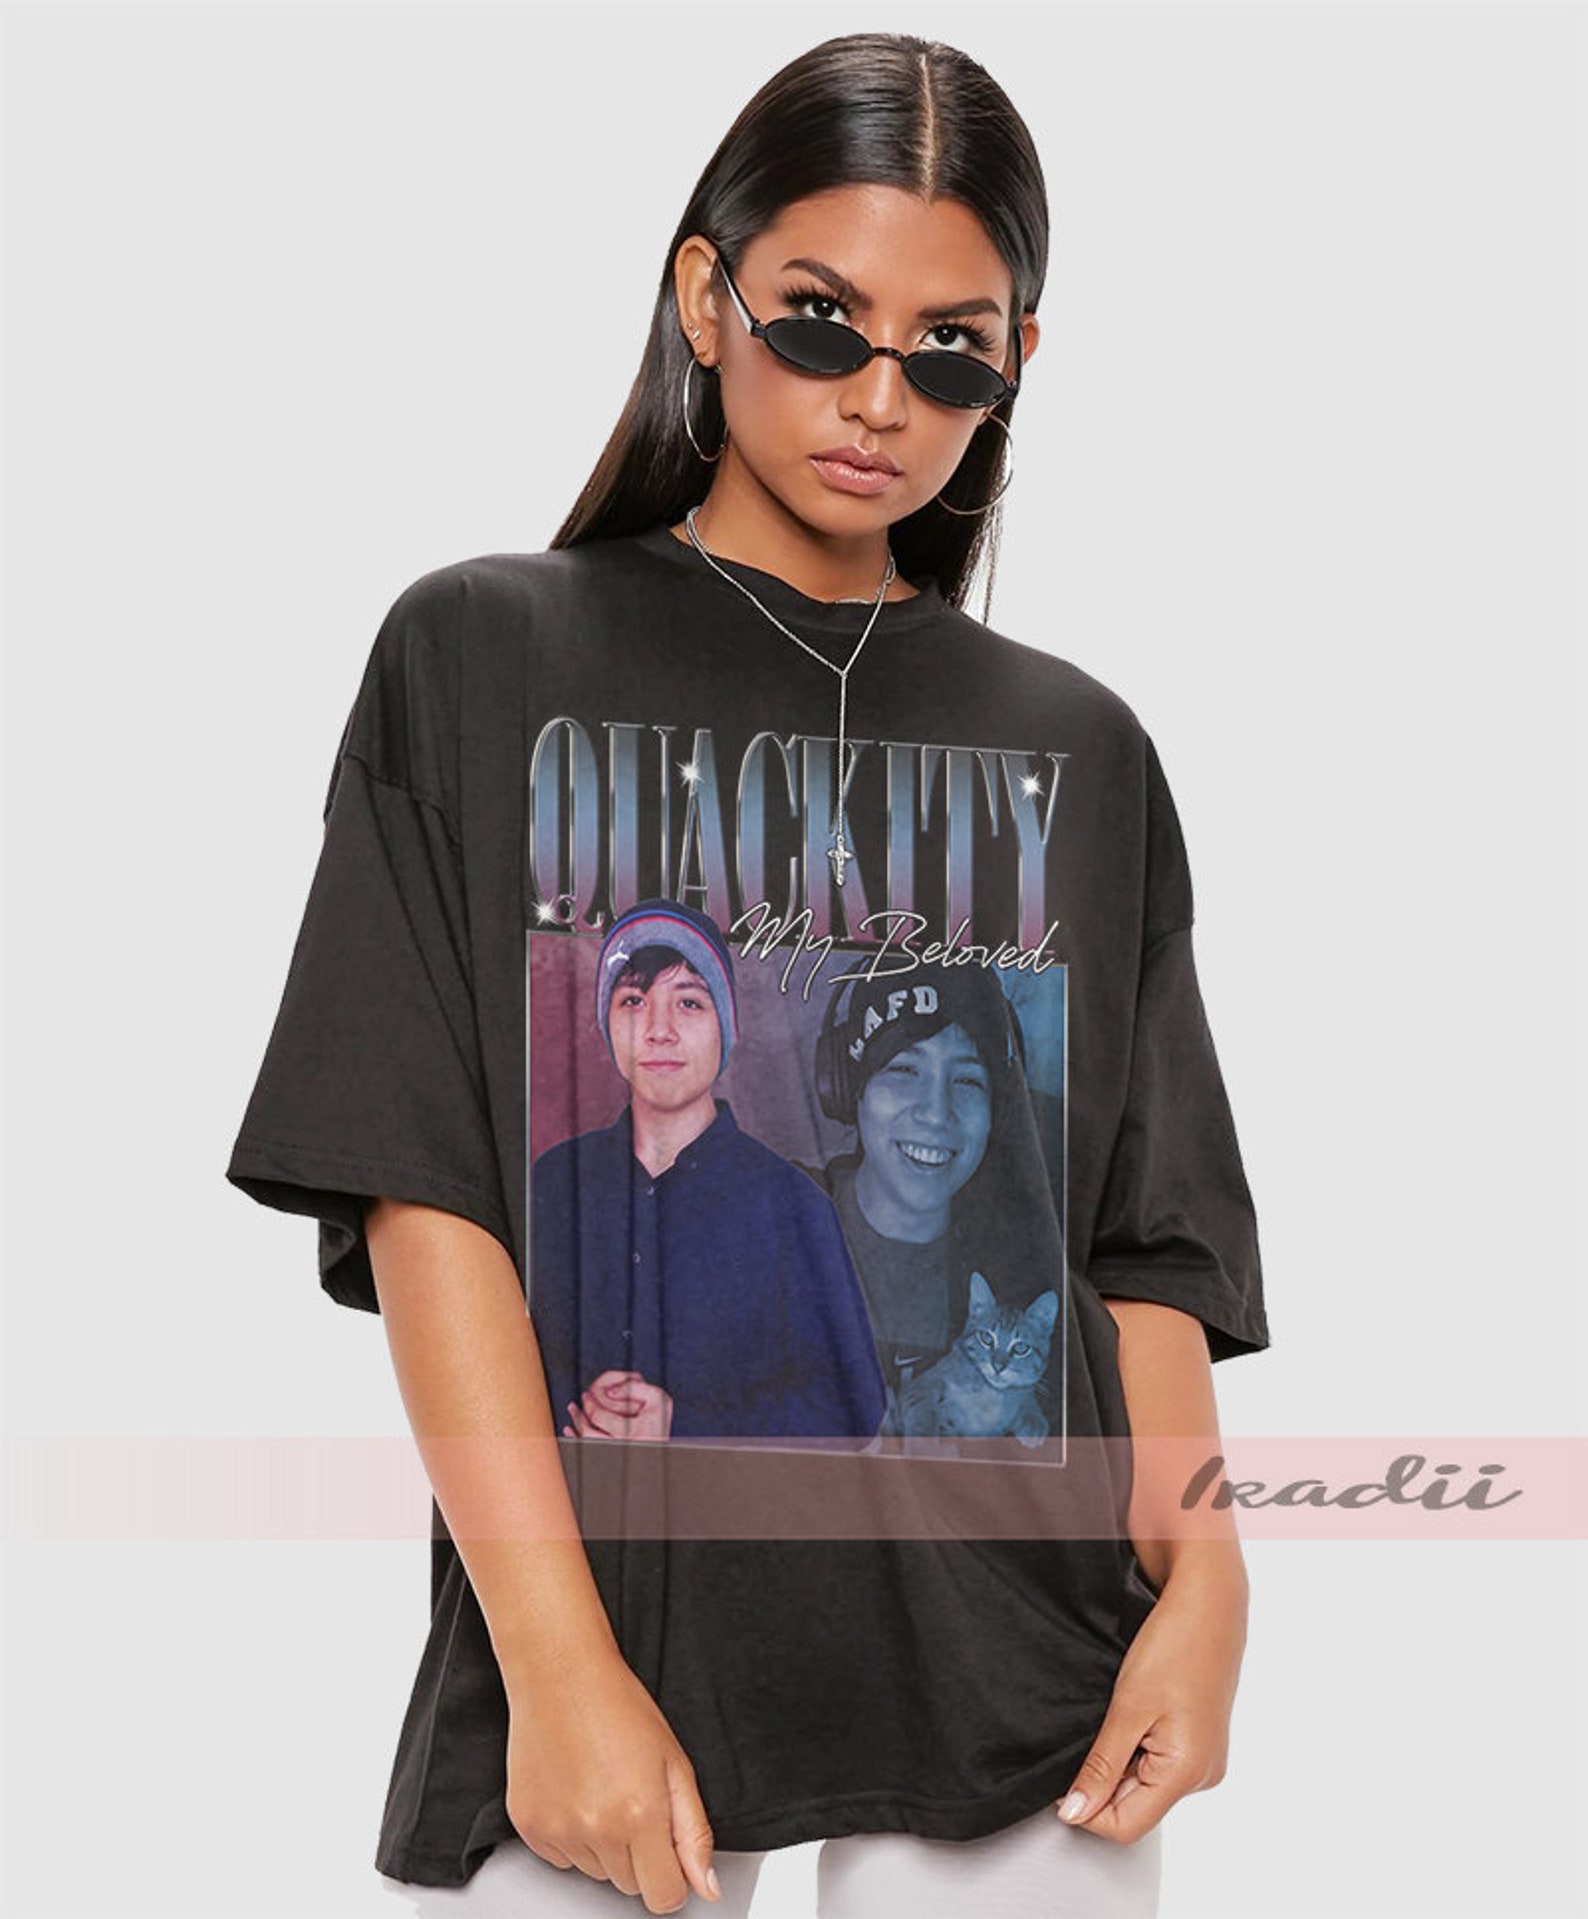 Quackity my beloved shirt Shirt Quackity retro aesthetic T | Etsy